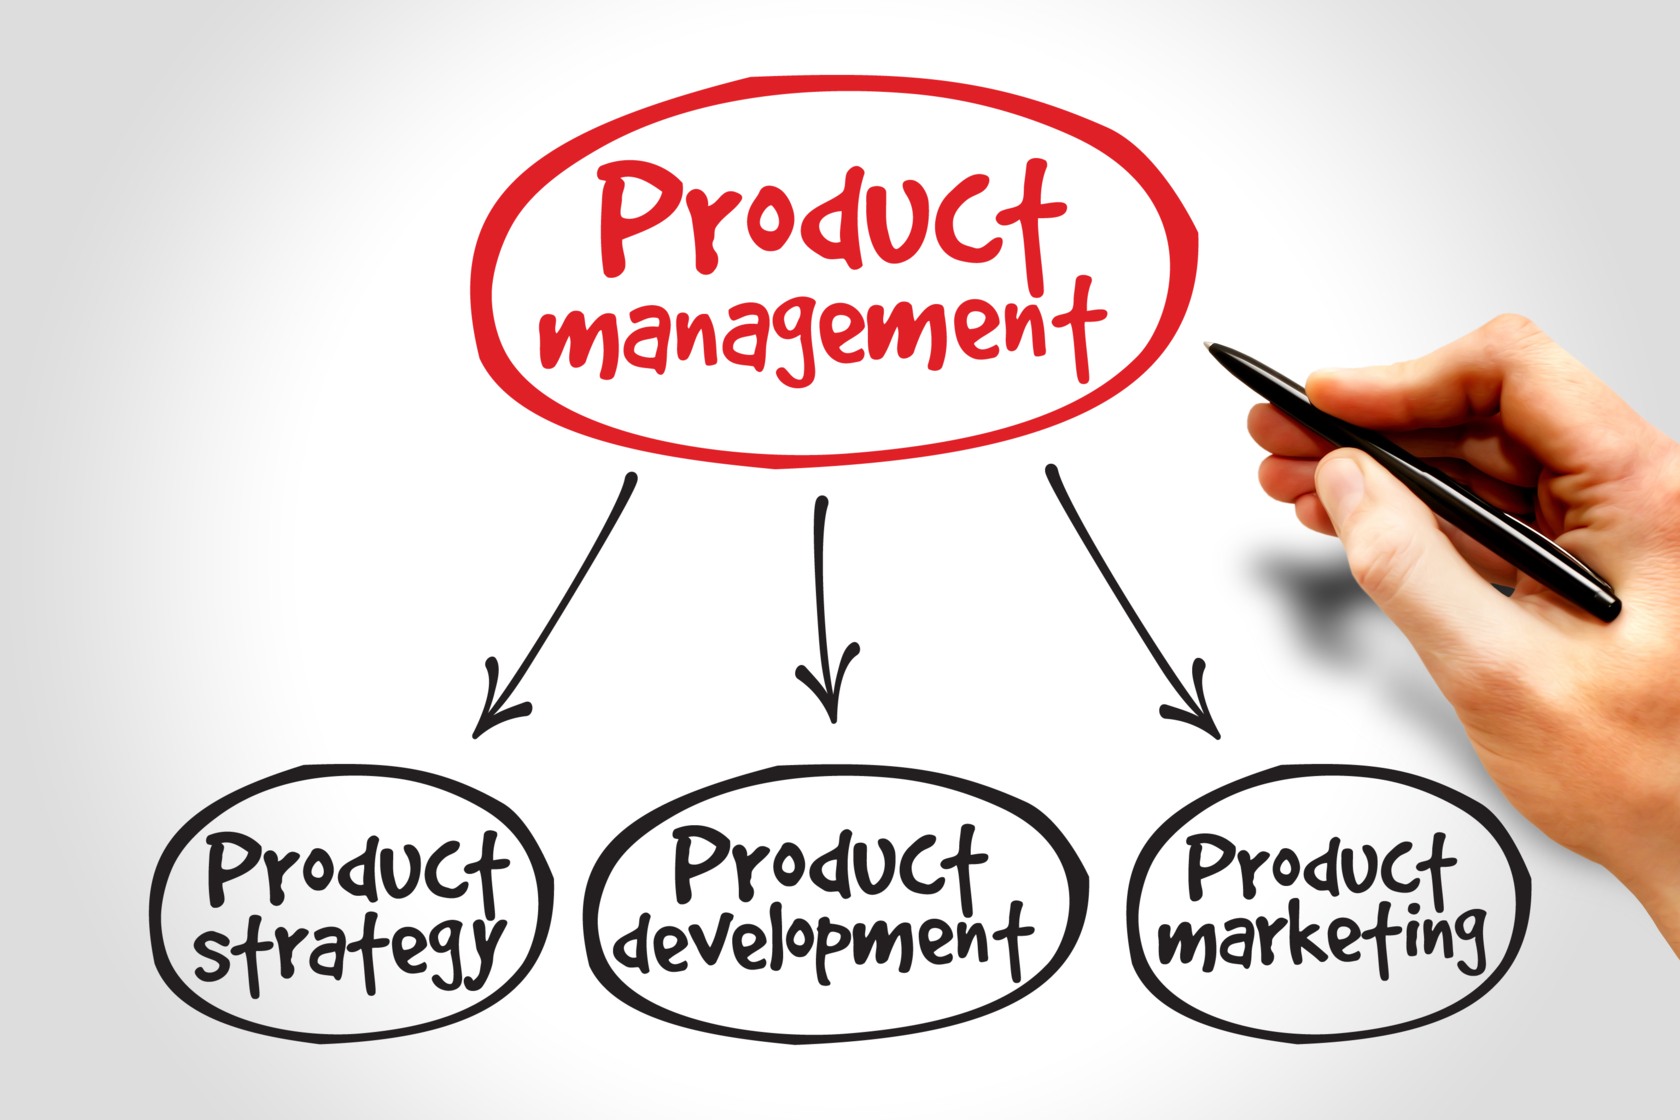 Product вакансии. Продакт менеджер. Продакт - менеджер (product Manager). Менеджер по продукту. Продукт в маркетинге.